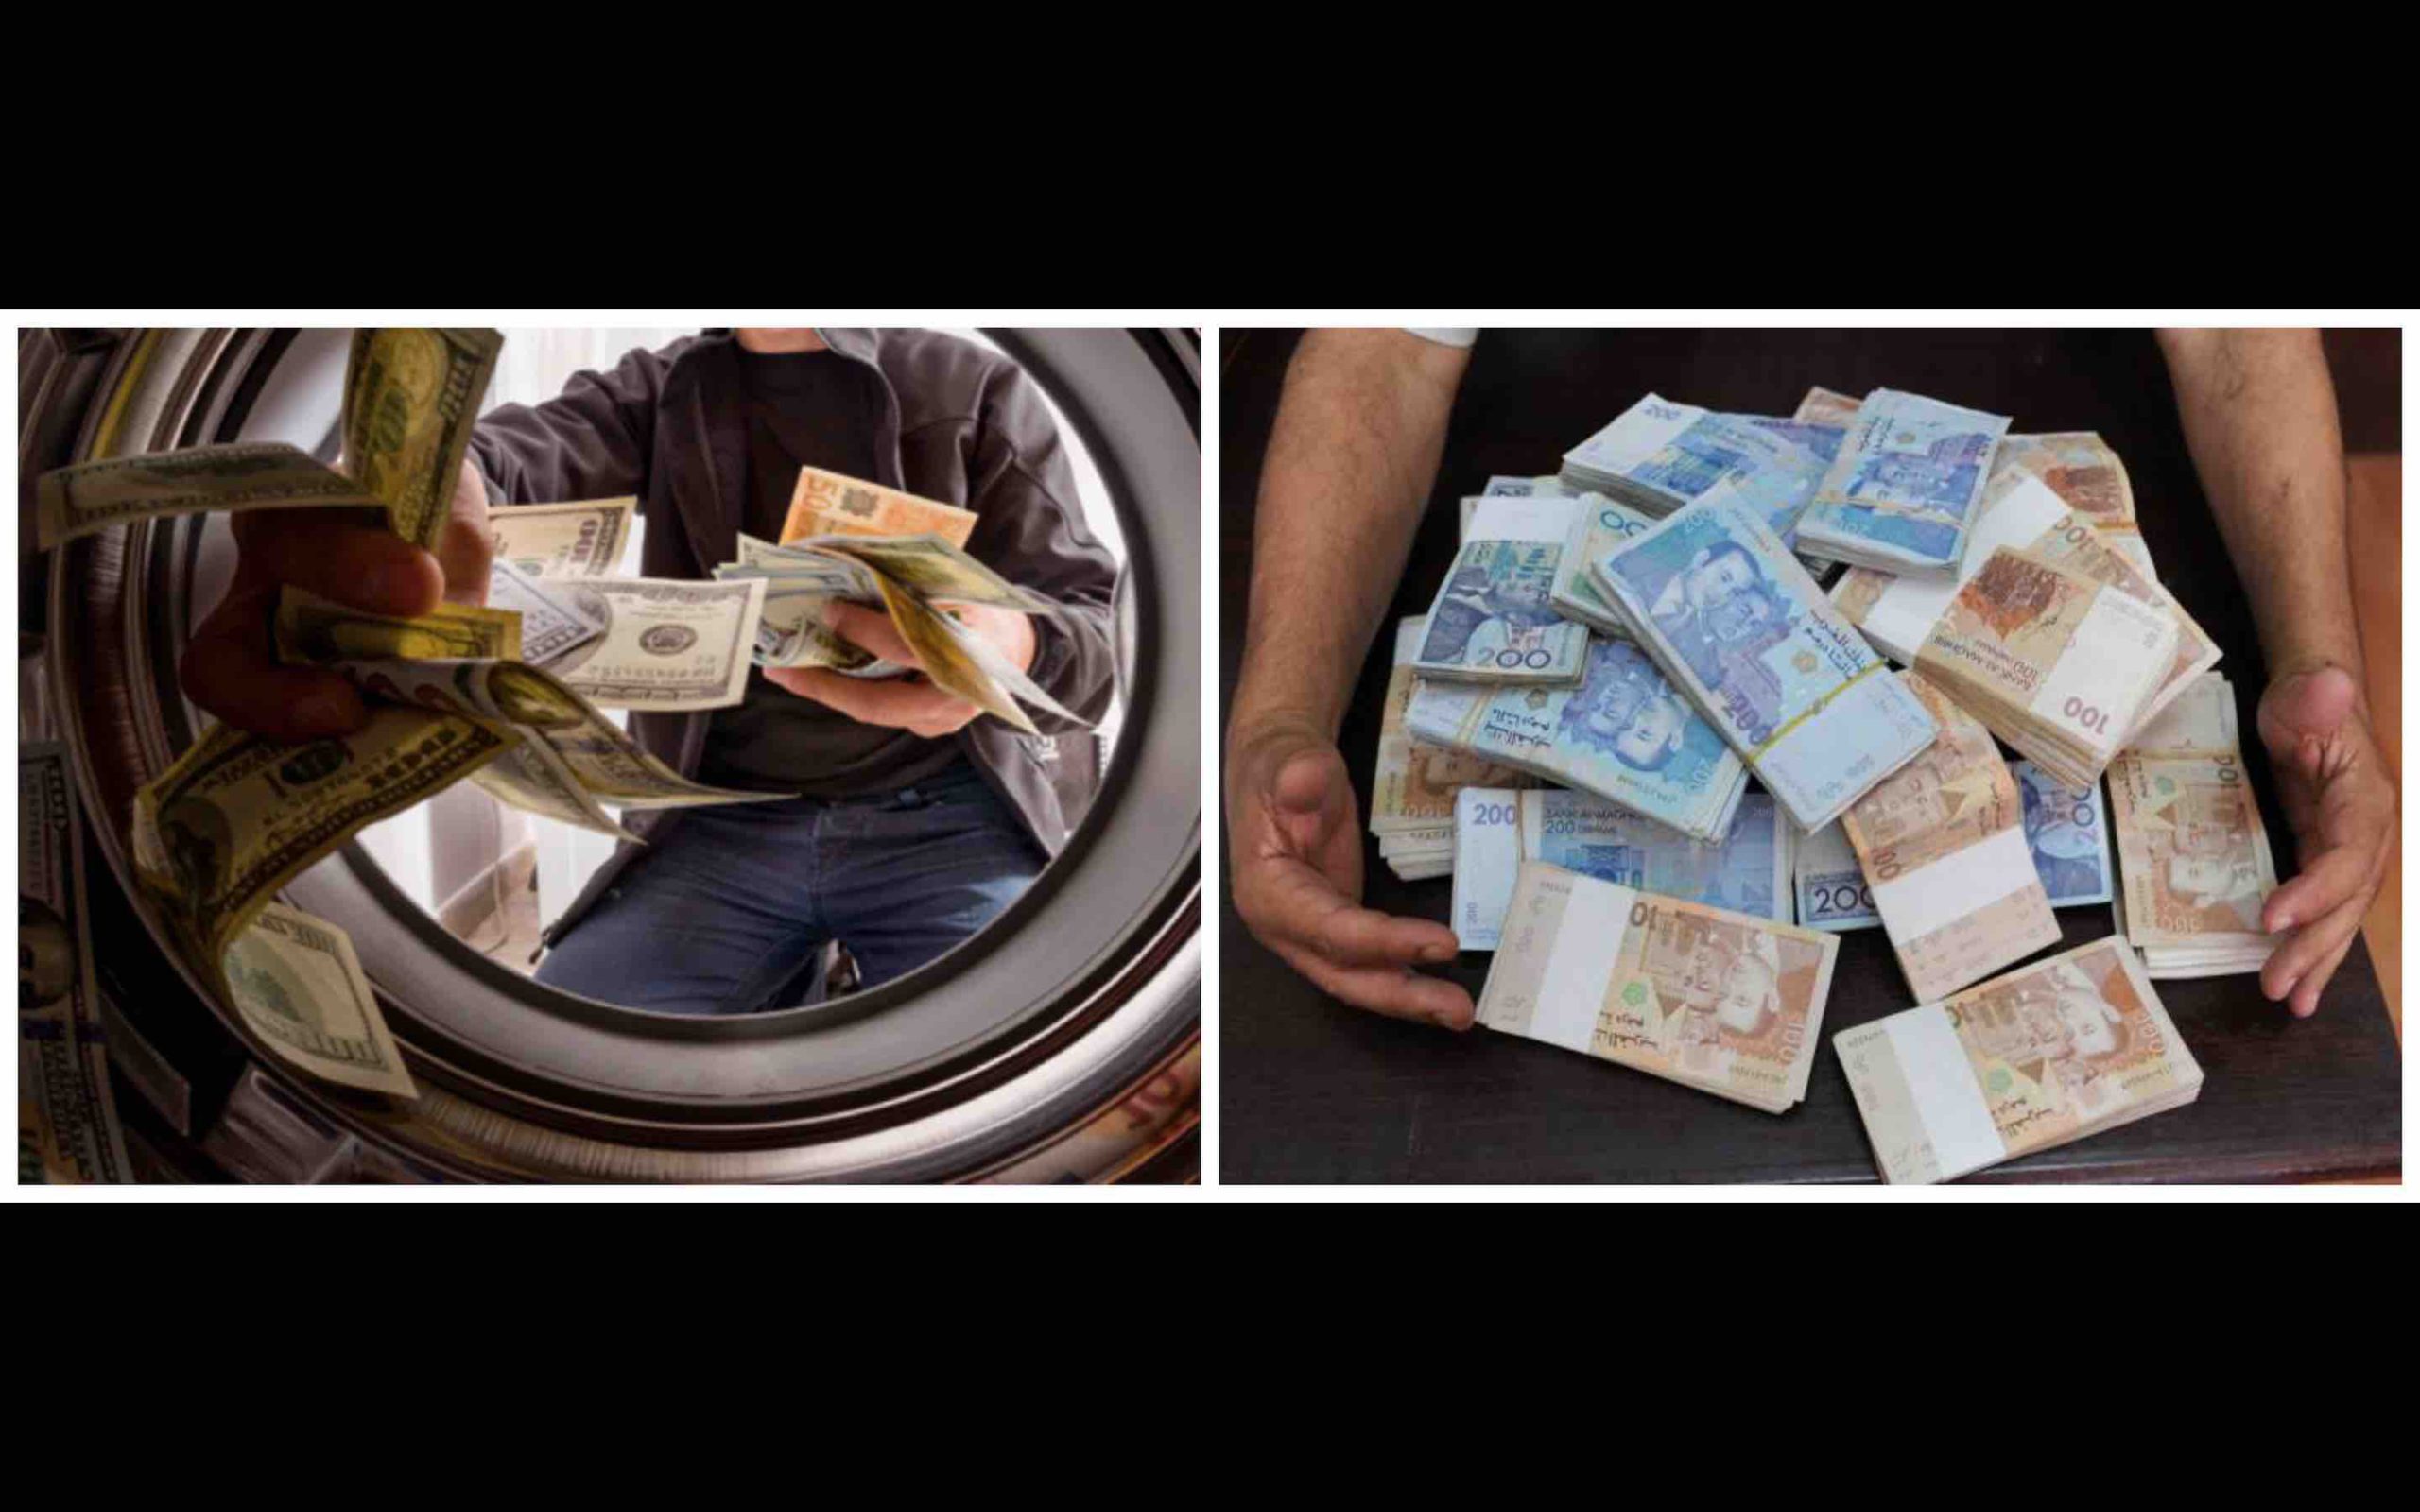  Money laundering: a validation workshop held on Monday 